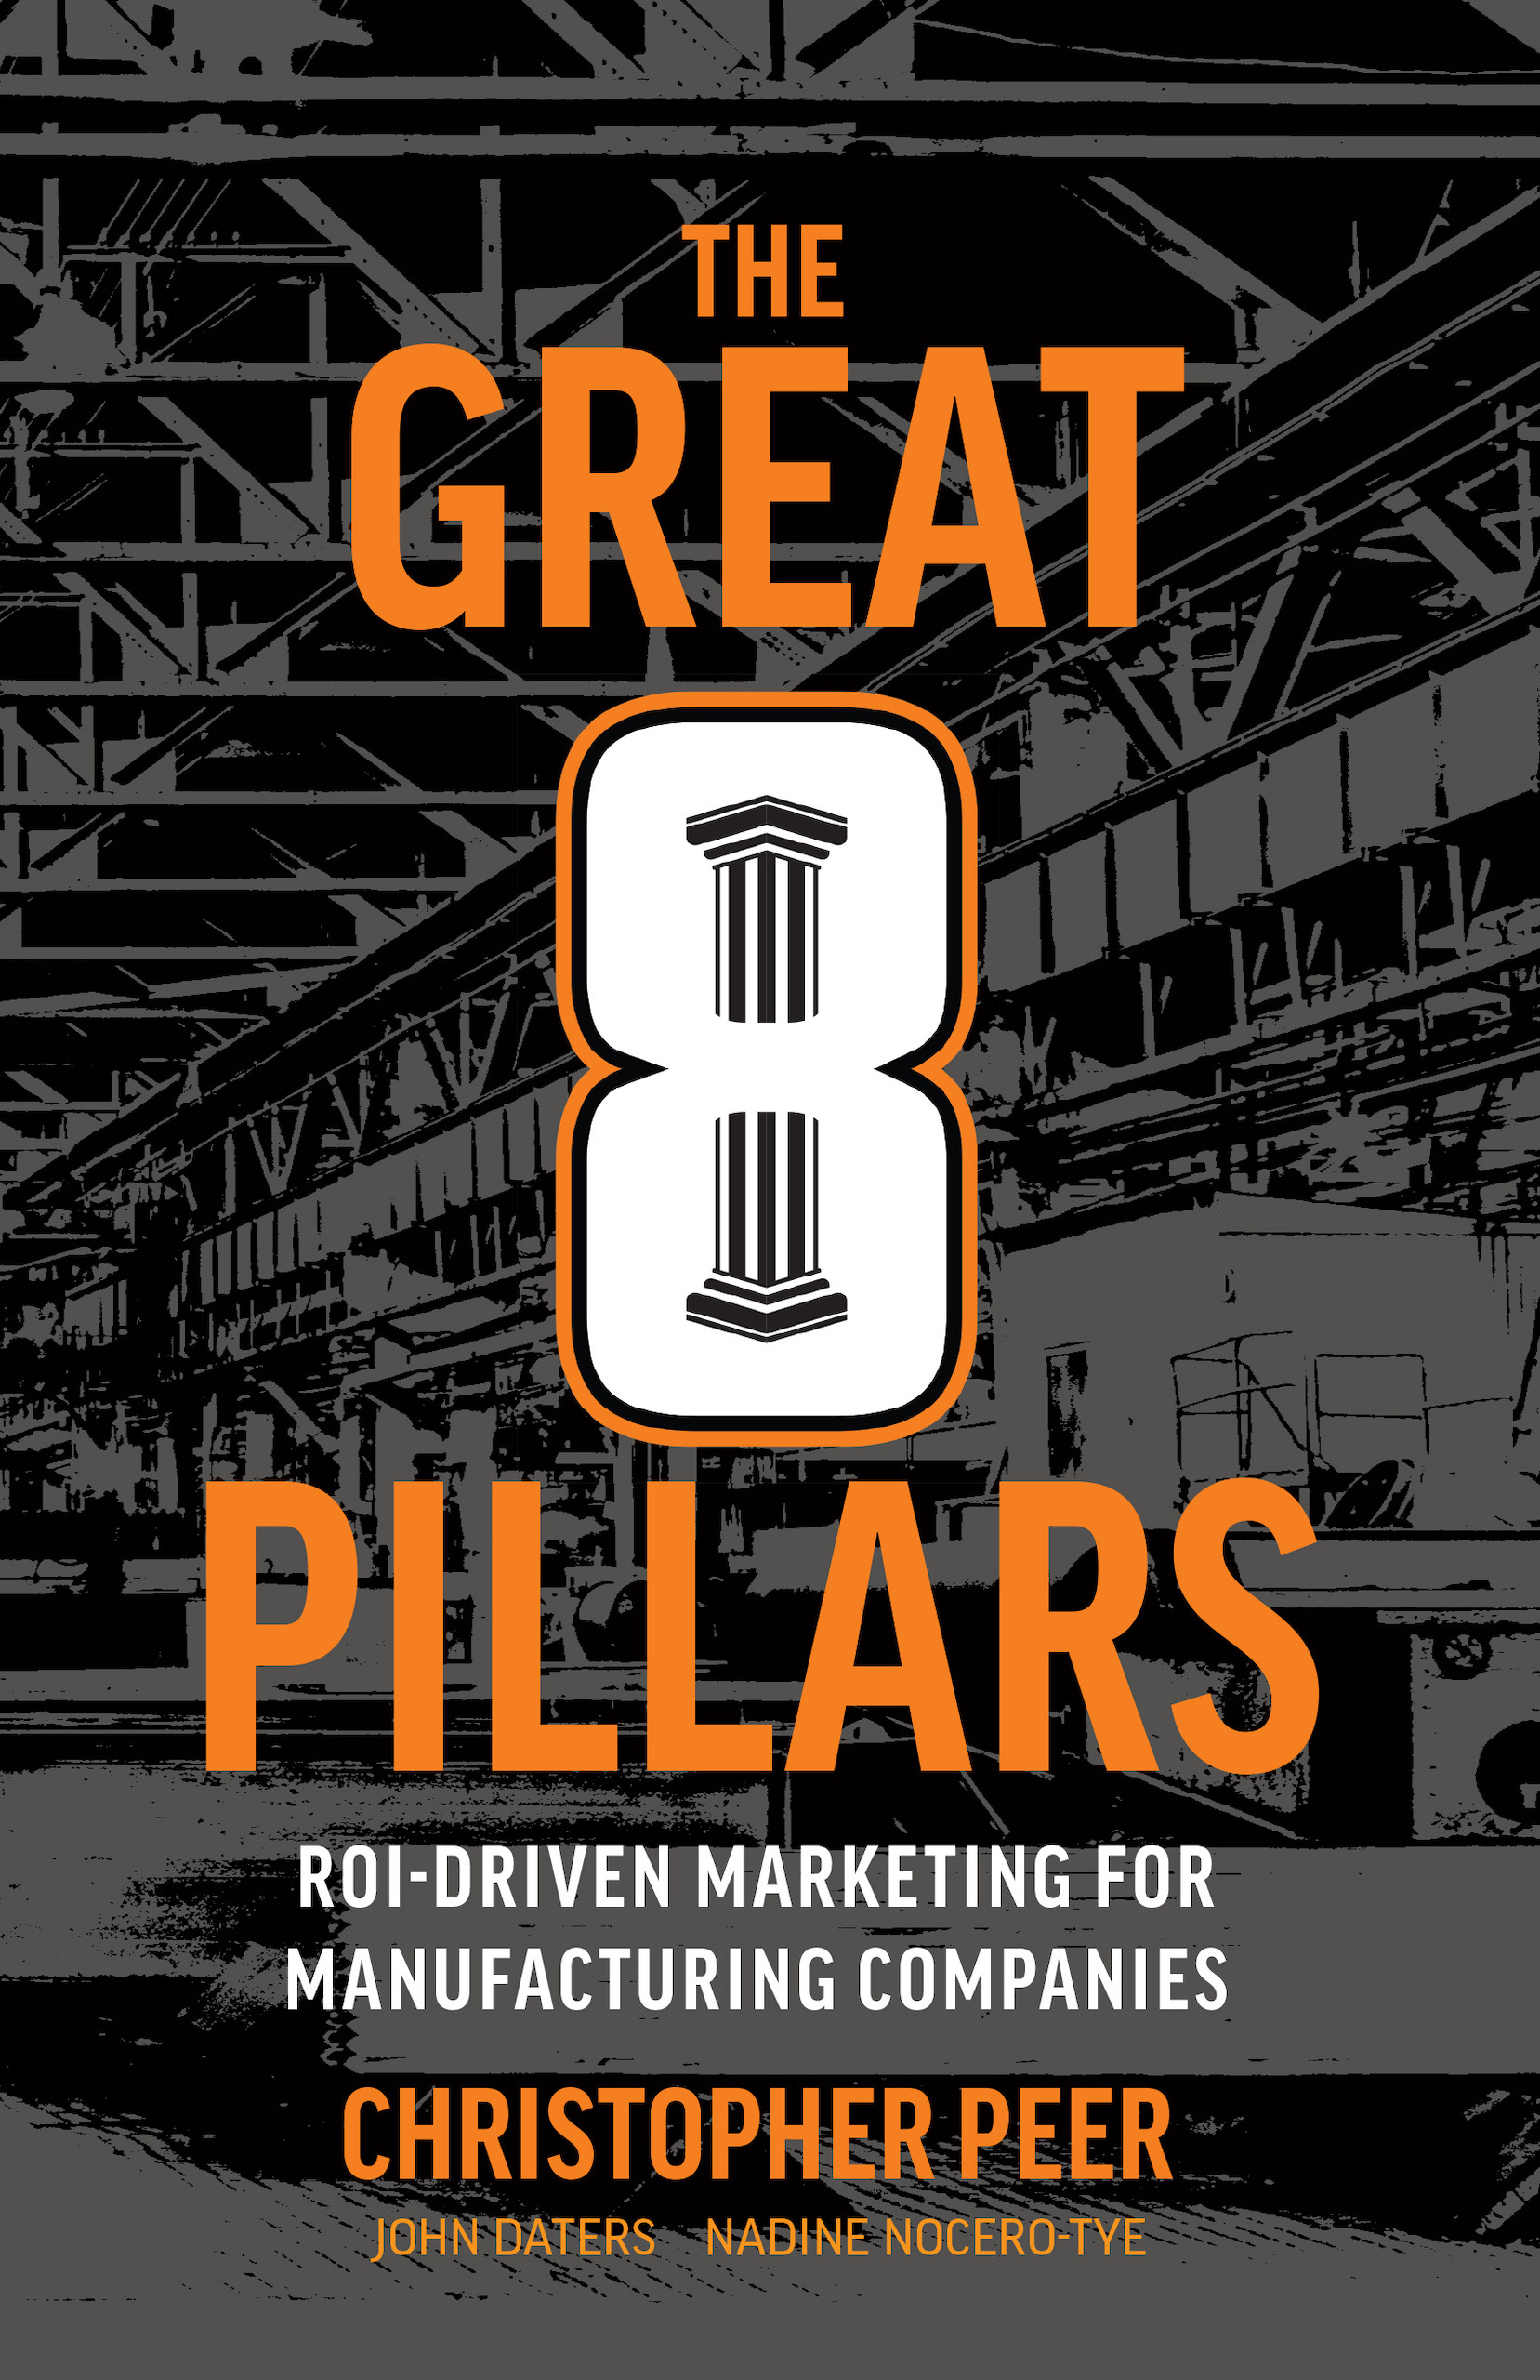 The Great 8 Pillars